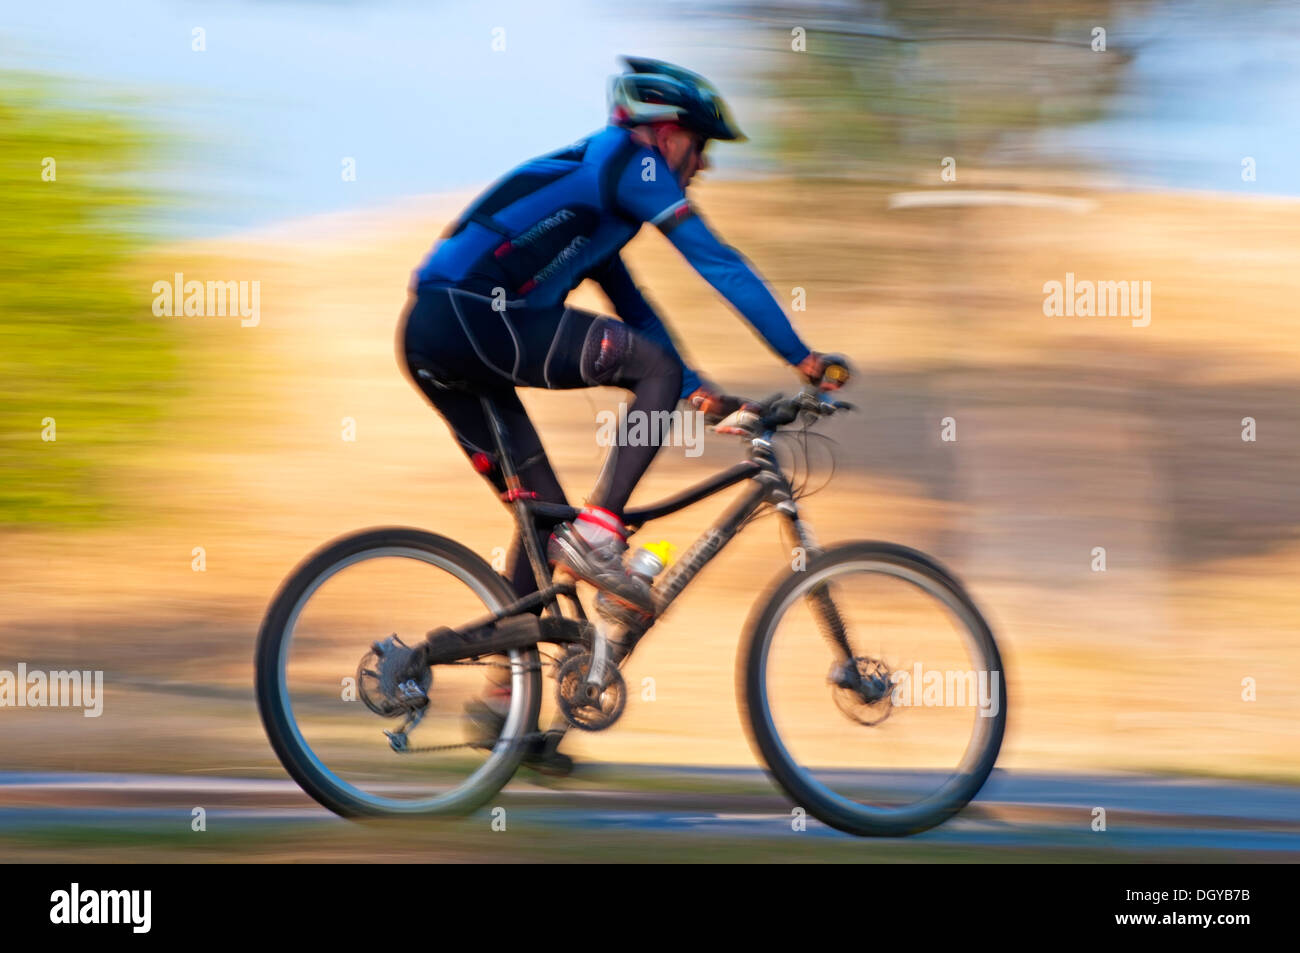 Mountain bike, Rider in blurred motion Stock Photo - Alamy